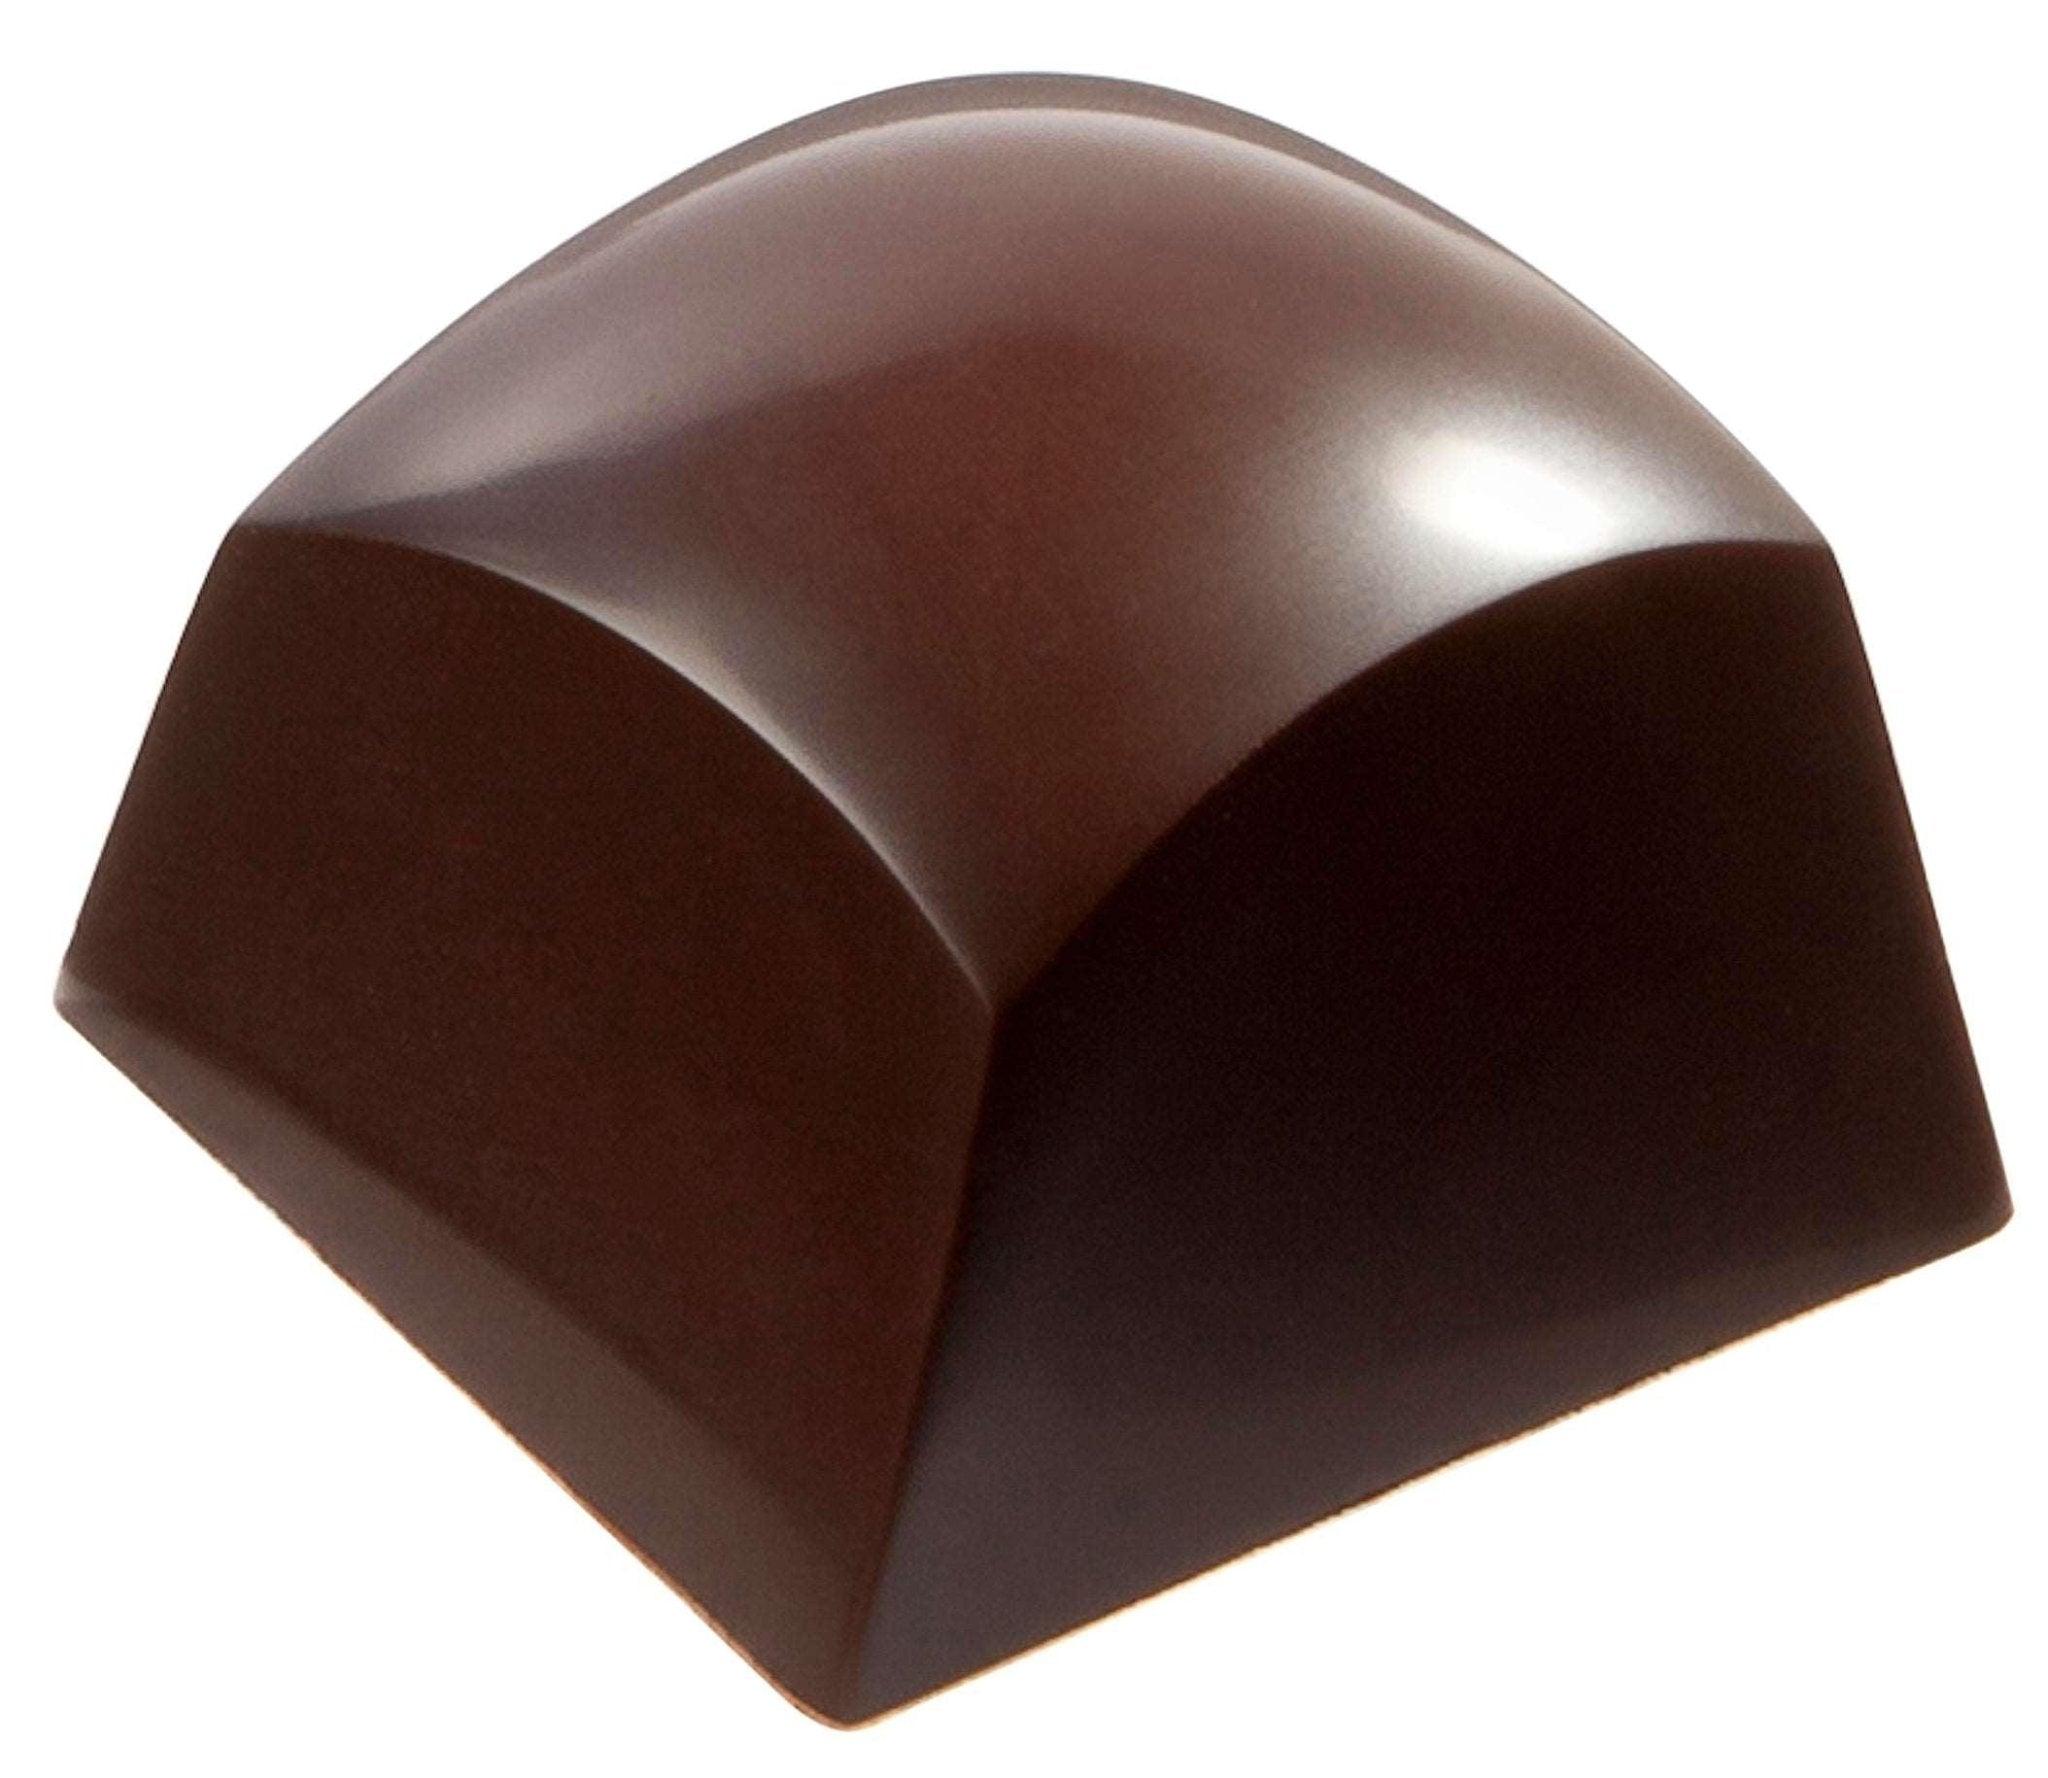 CHOCOLATE MOLD ROUND CUBE - RUTH HINKS CW1753 - Zucchero Canada